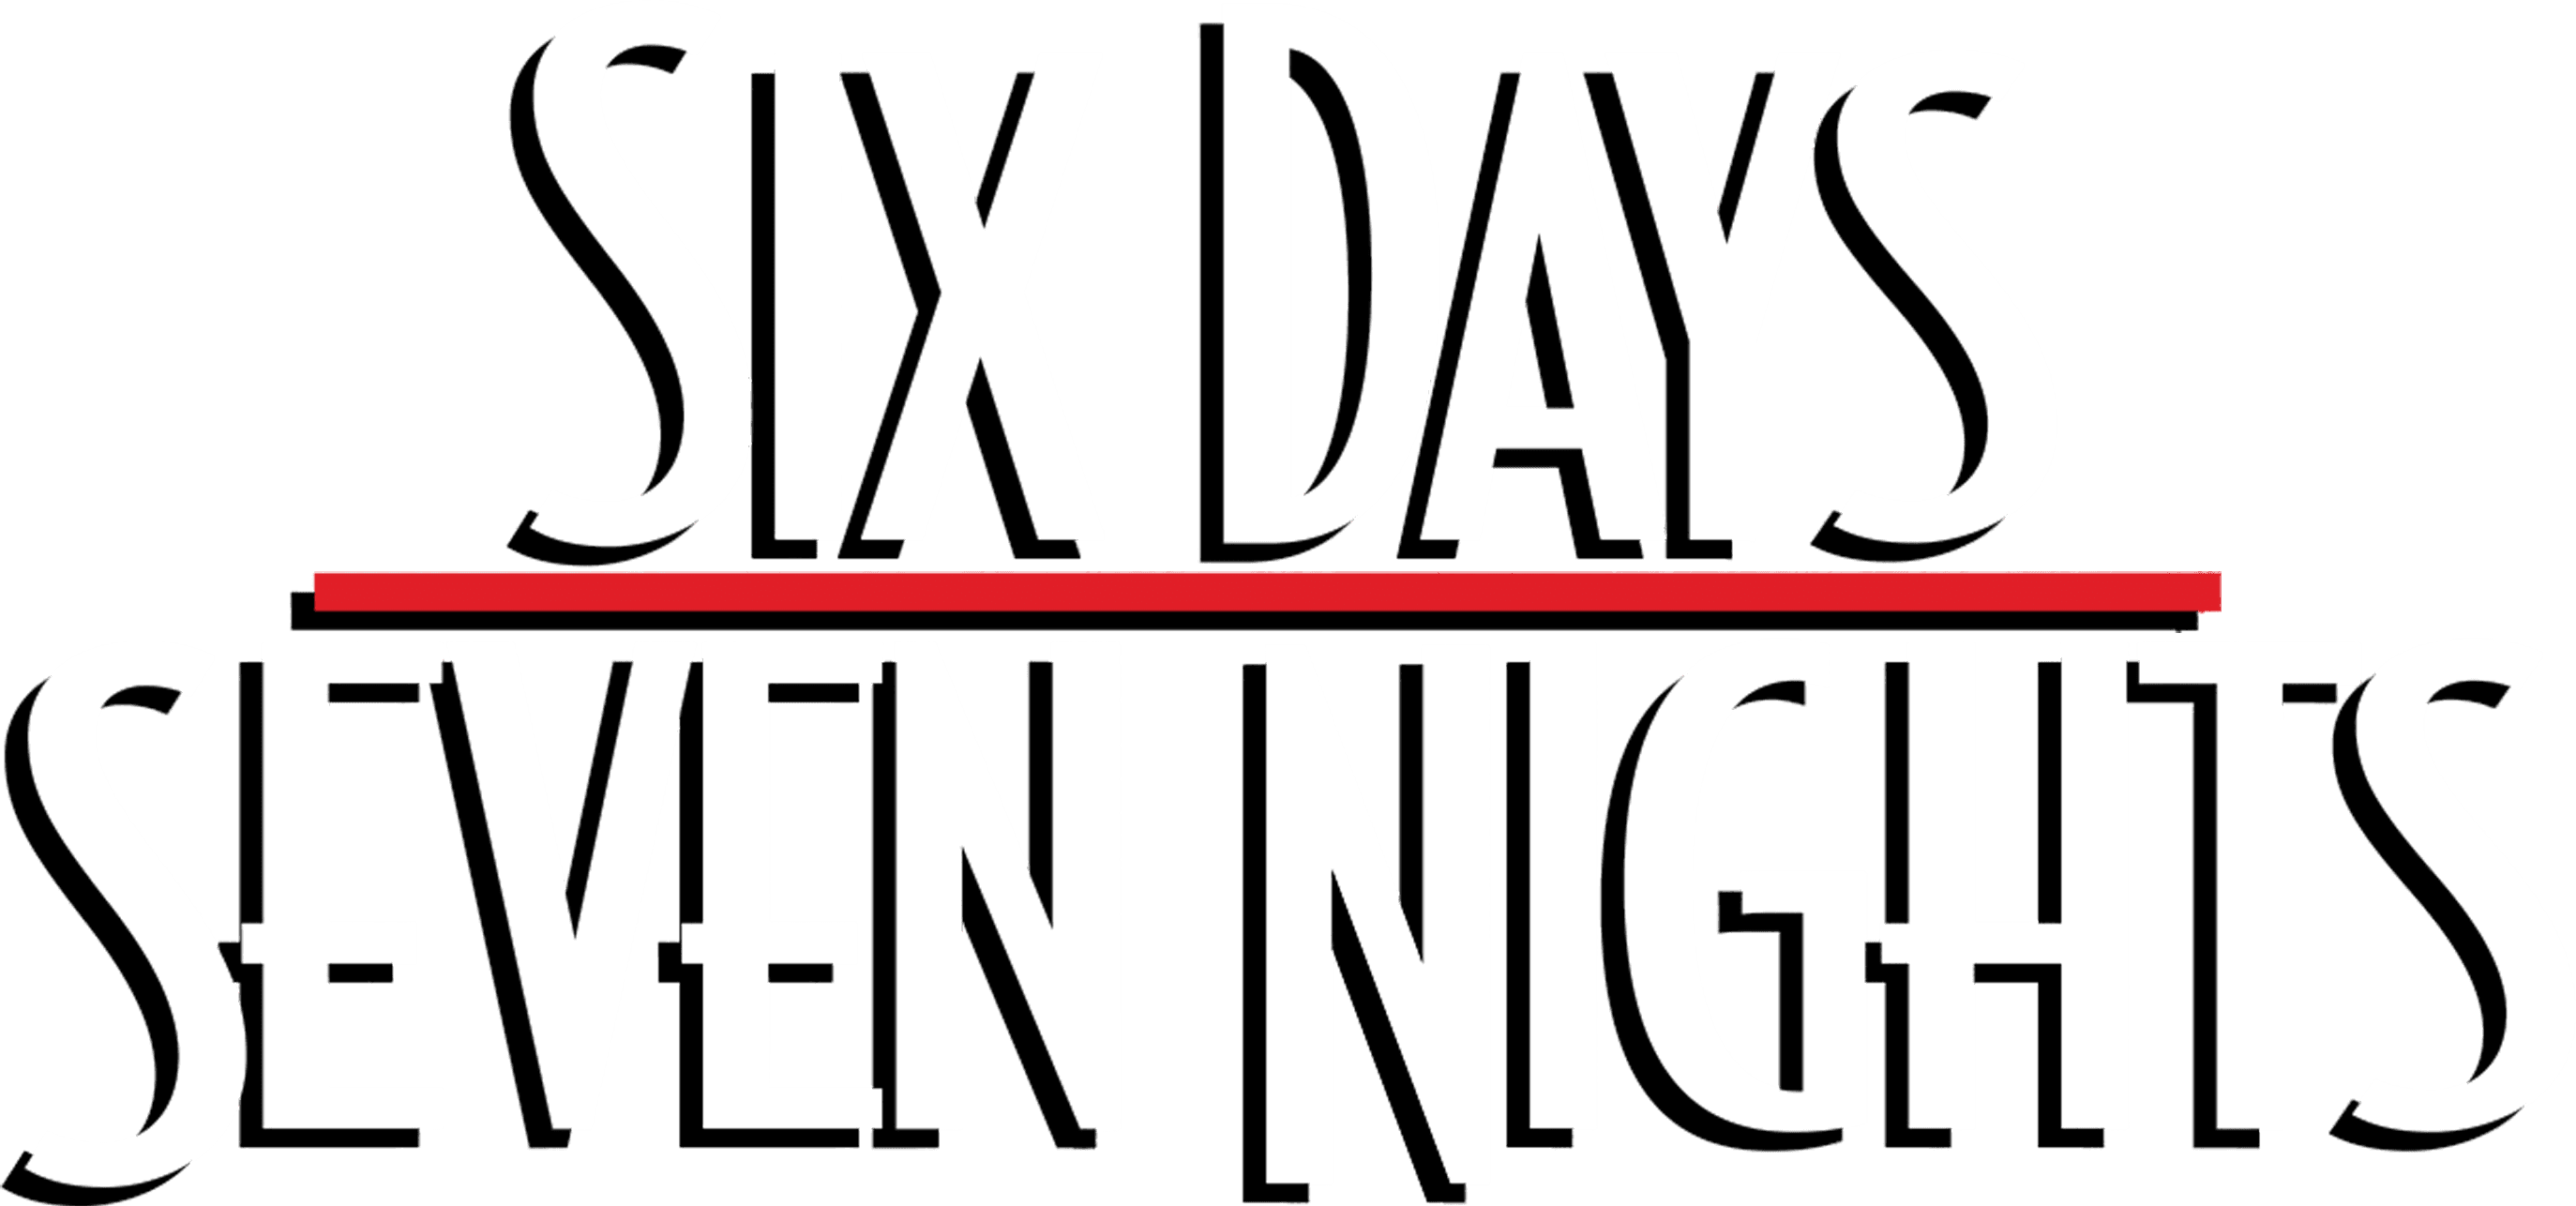 Six Days Seven Nights logo